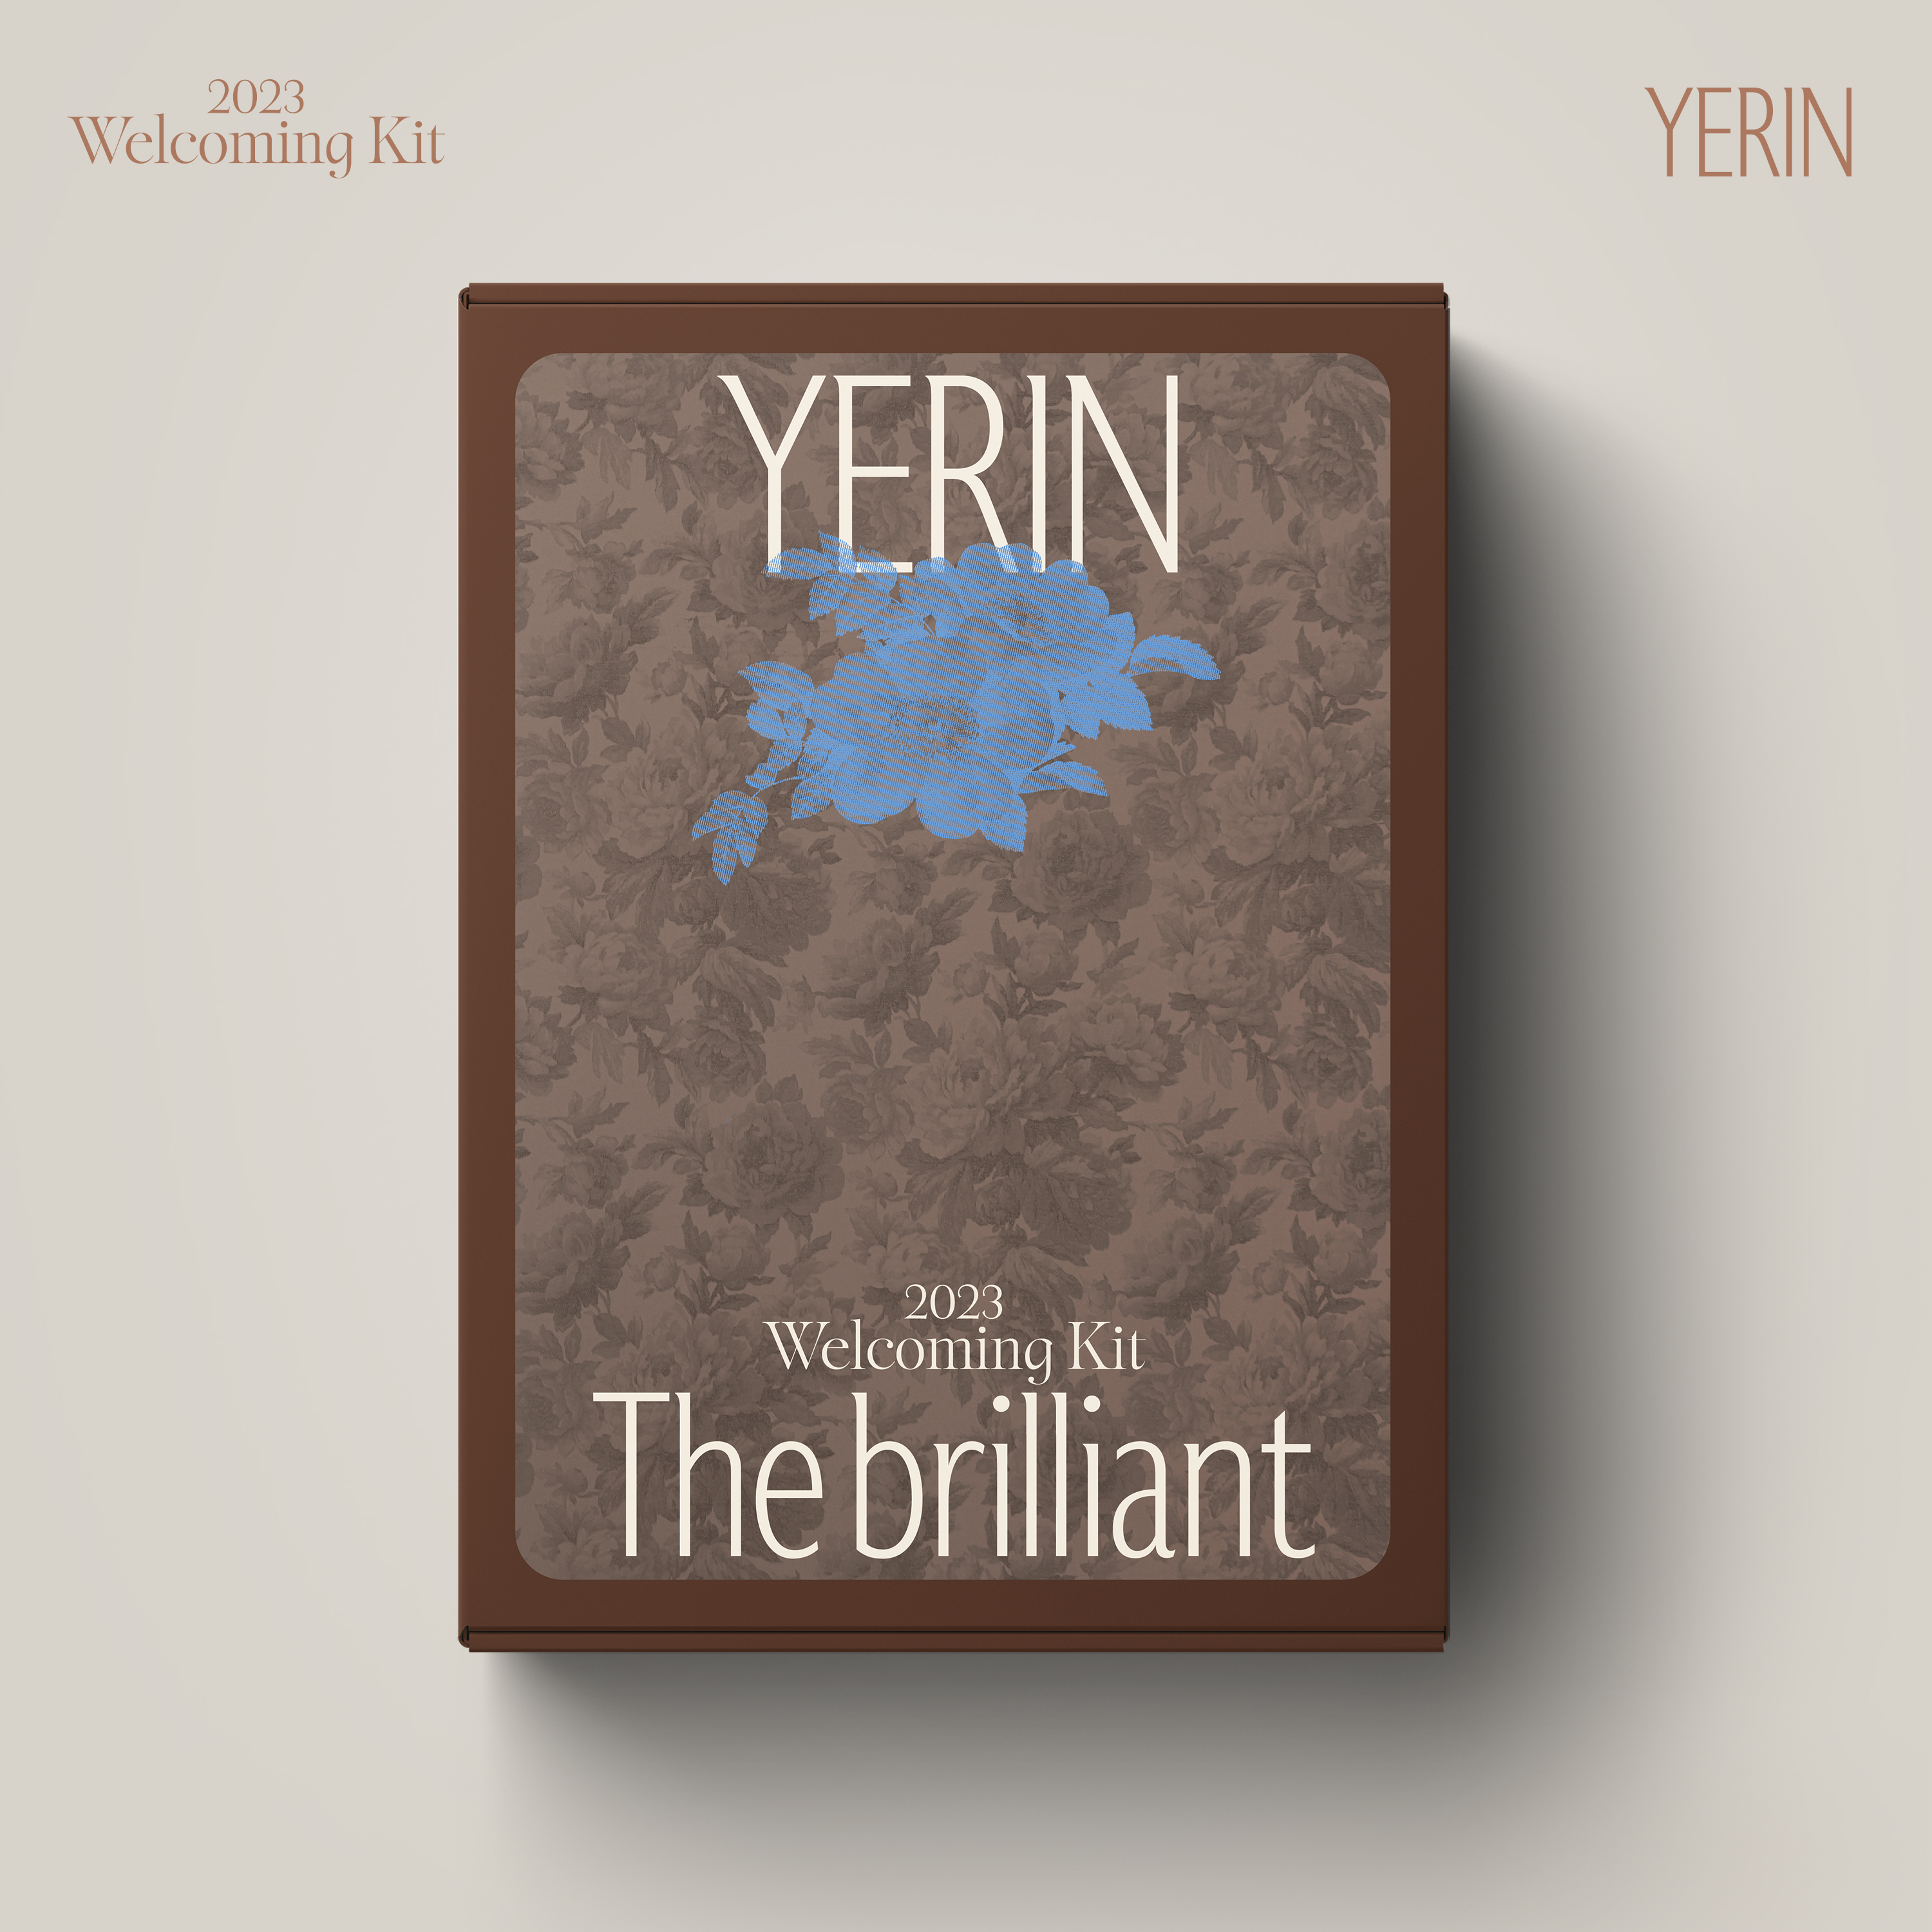 [全款] [2nd] [视频签售活动] YERIN - 2023 WELCOMING KIT [The brilliant]_Yerin郑艺琳吧